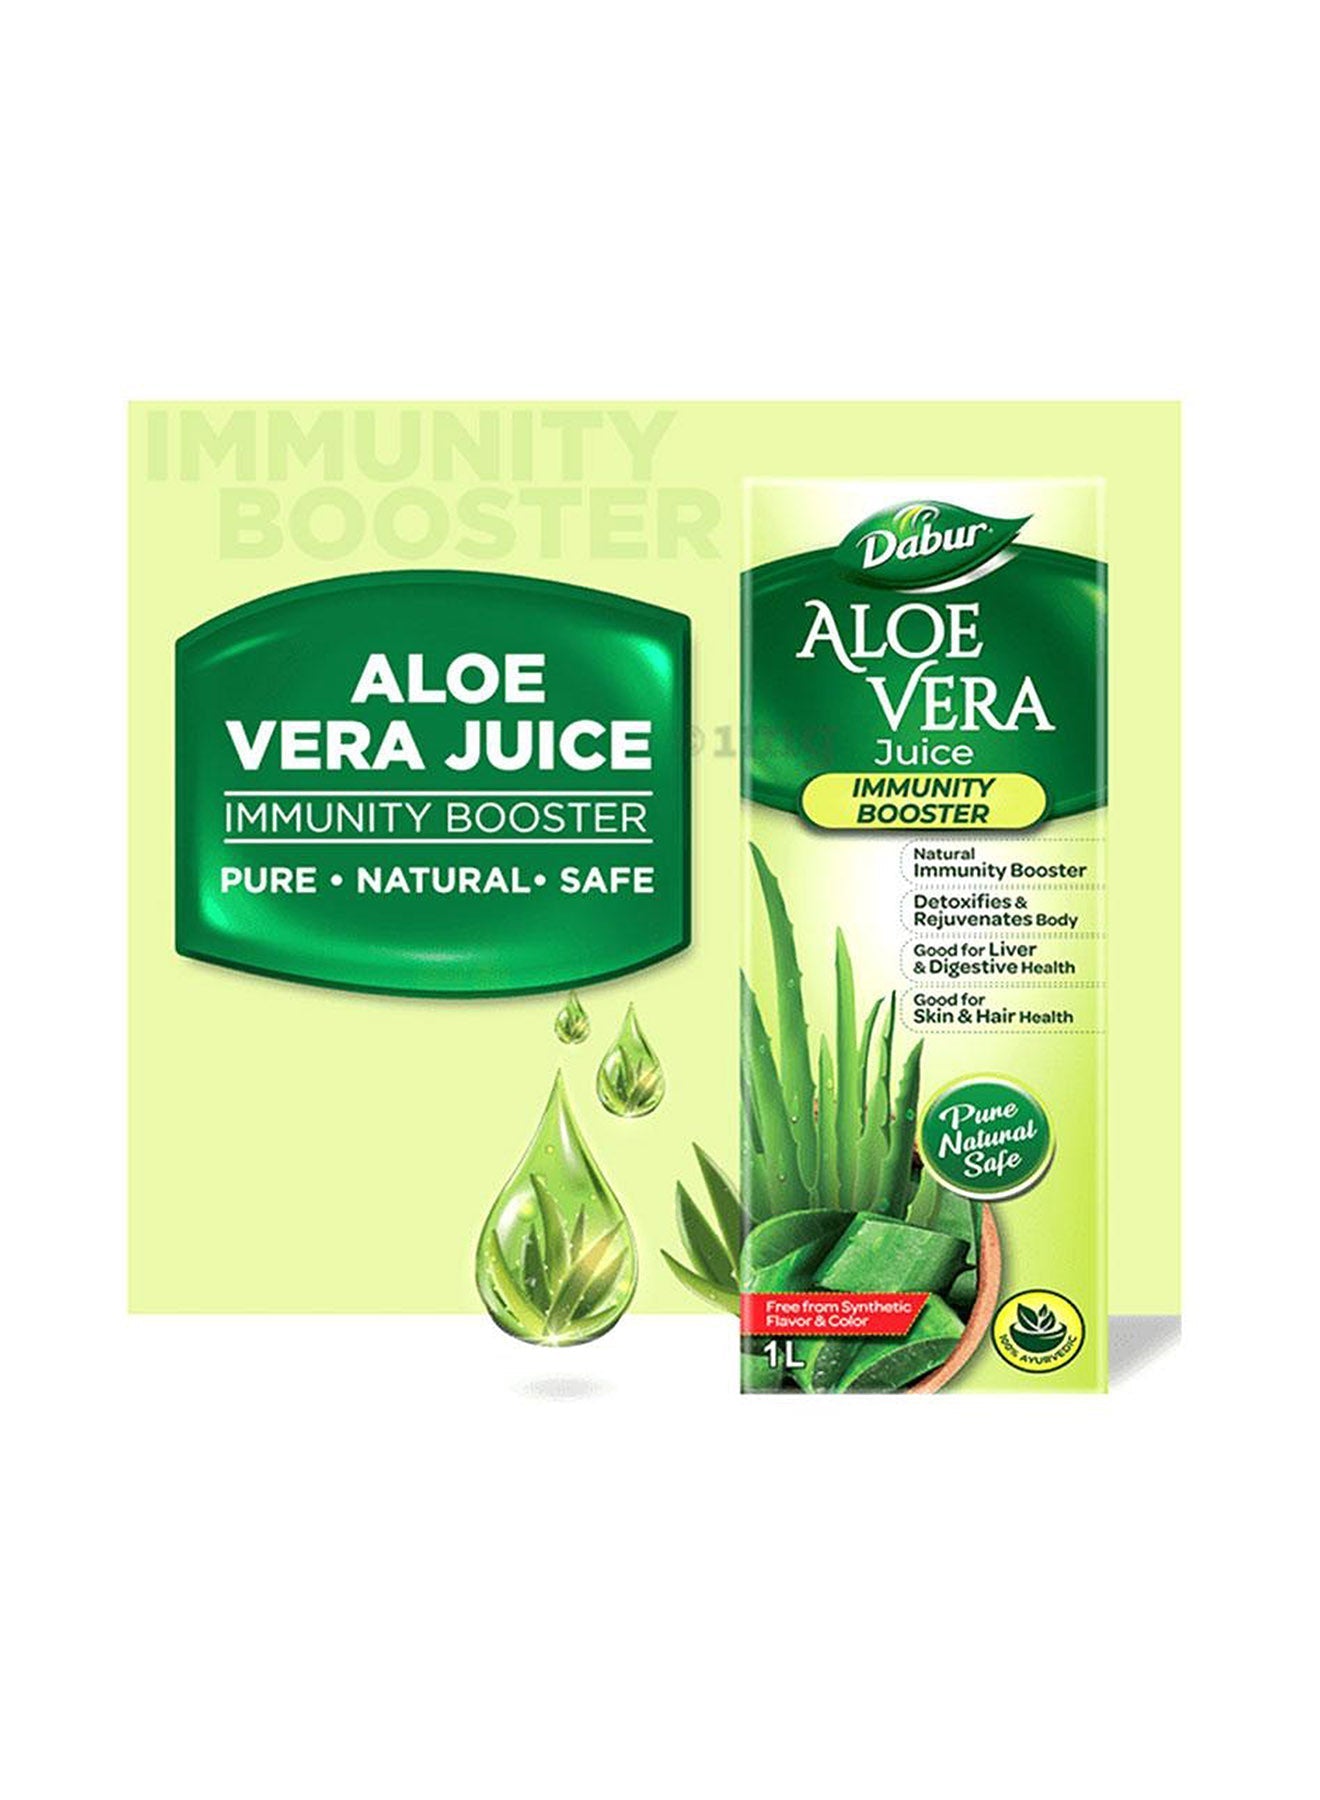 Dabur Aloe Vera Juice 1 Litre Immunity Booster Pure Natural Safe